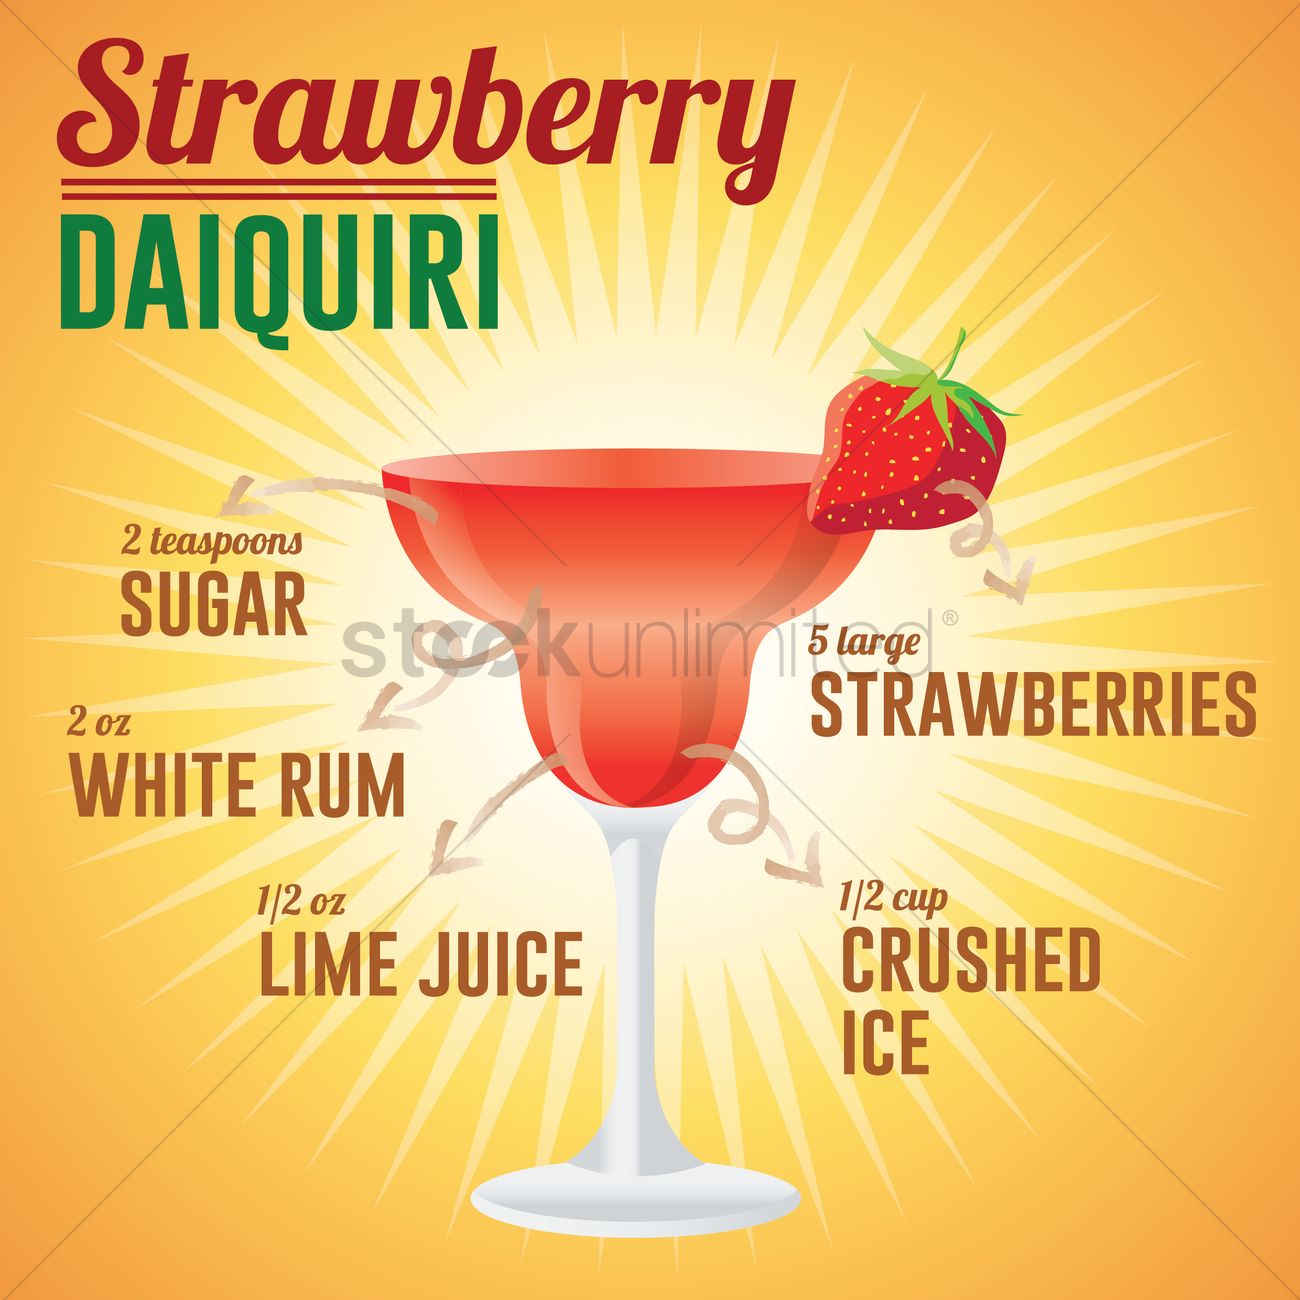 Strawberry Daiquiri Drink Wallpaper Vector Image